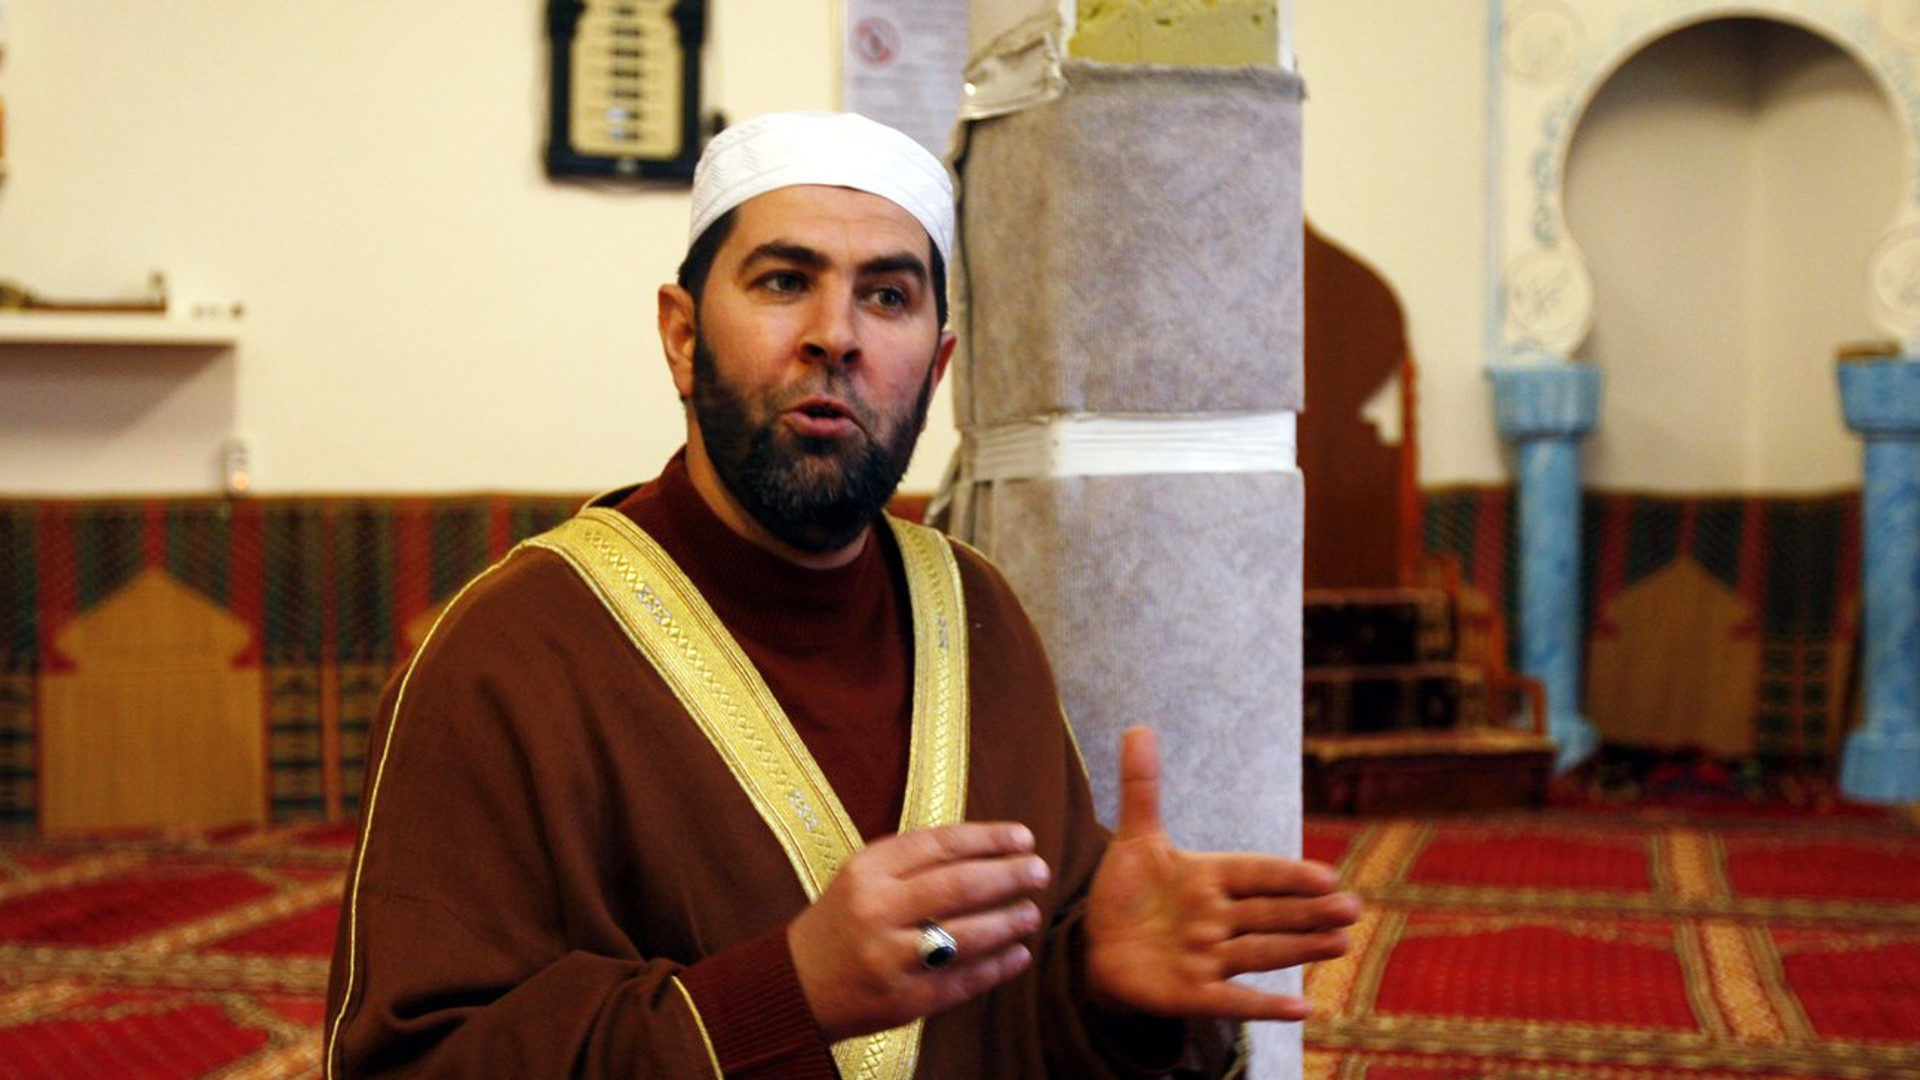 Samir Radouan Jelassi, Imam der Lega Musulmani Ticino, Lugano